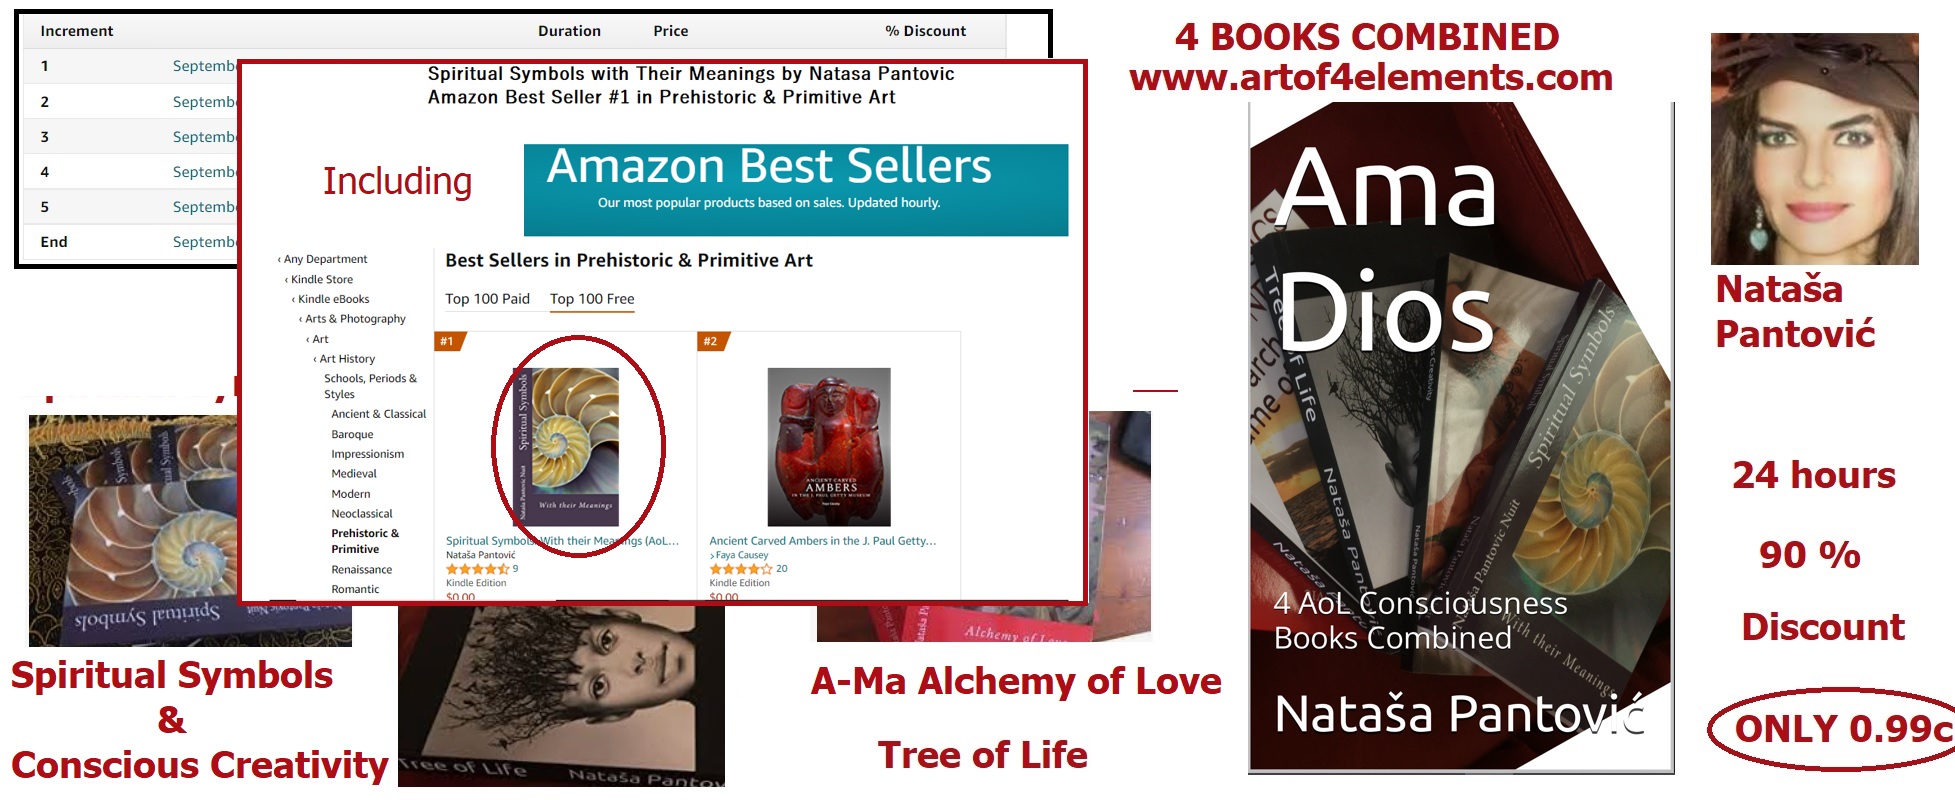 Natasa Pantovic Ama Dios 4 AoL Consciousness Books Combined Including Amazon Best Sellers Spiritual Symbols 